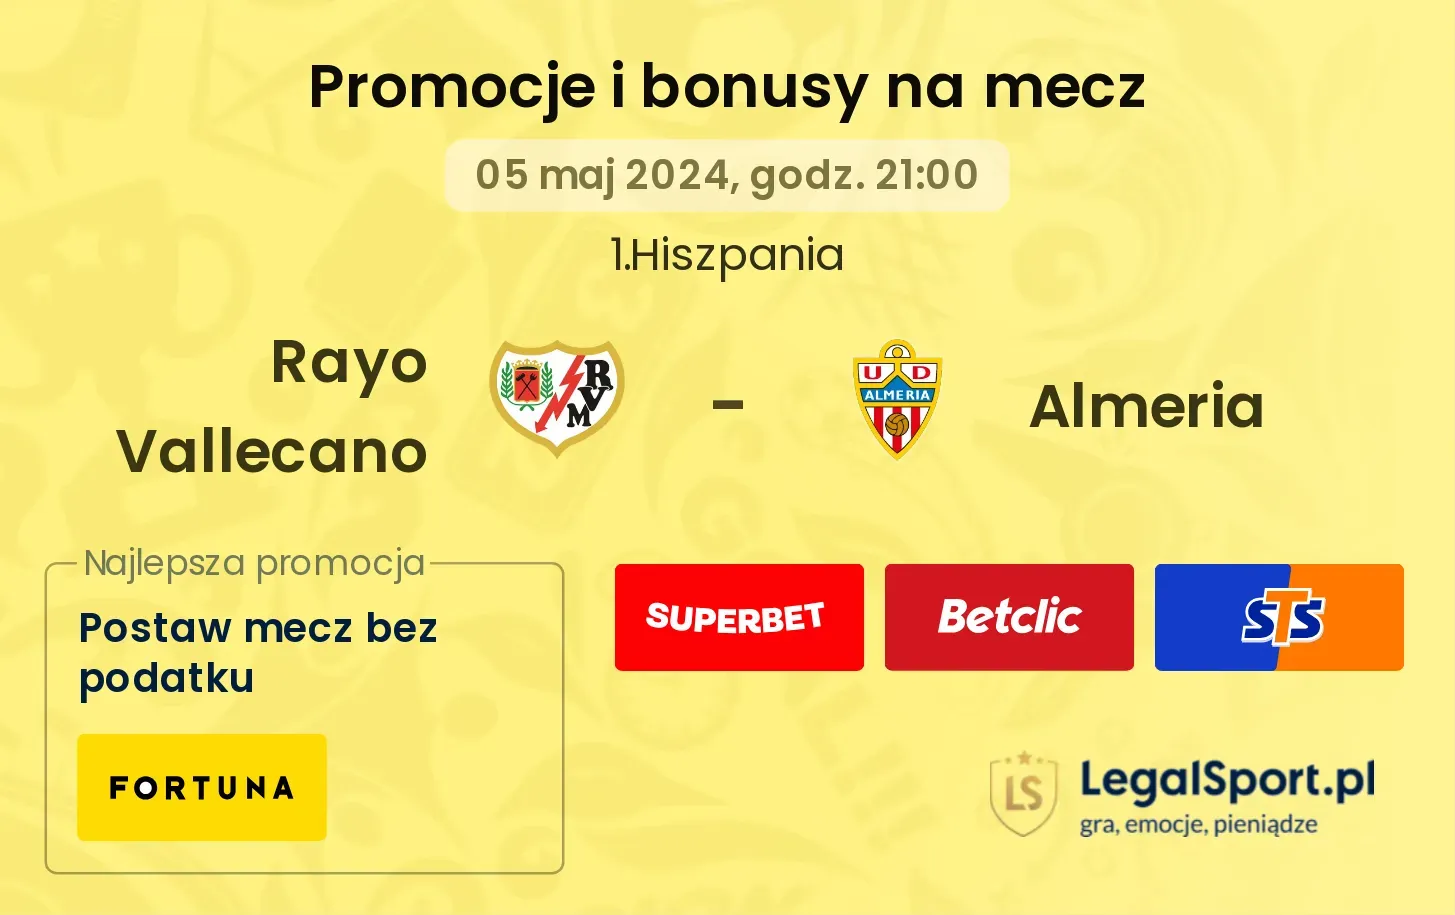 Rayo Vallecano - Almeria promocje bonusy na mecz